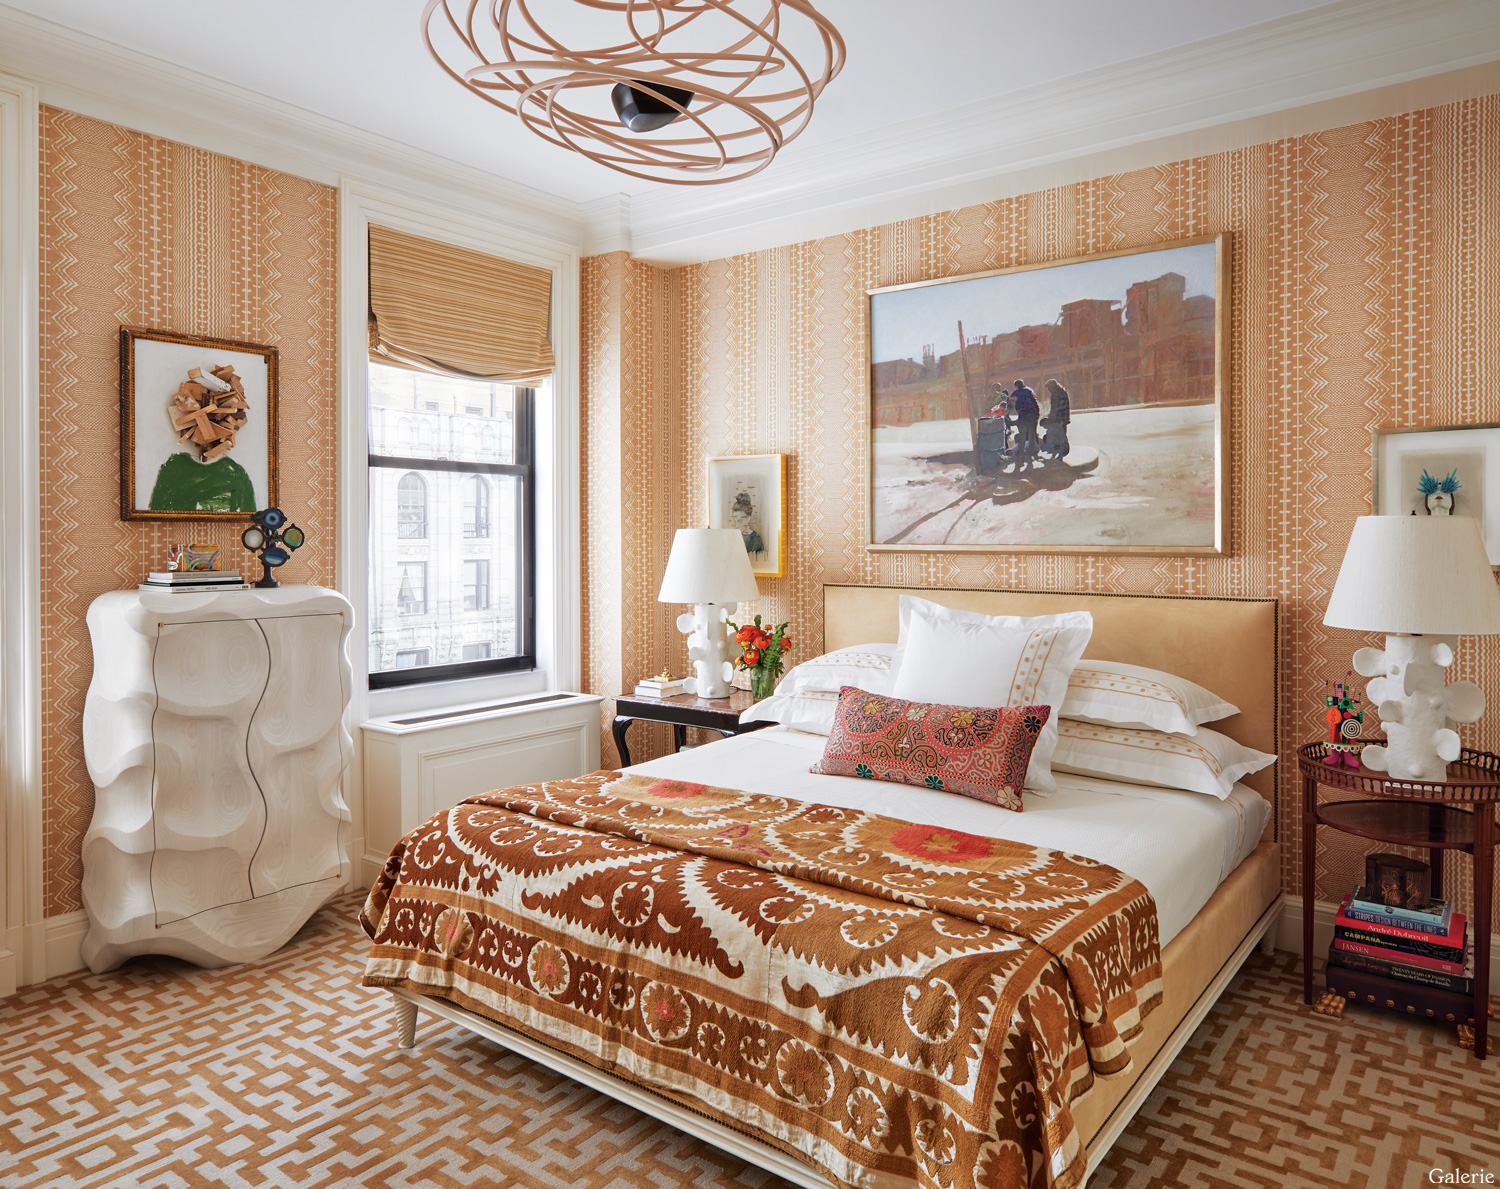 Brian McCarthy : bedroom design
